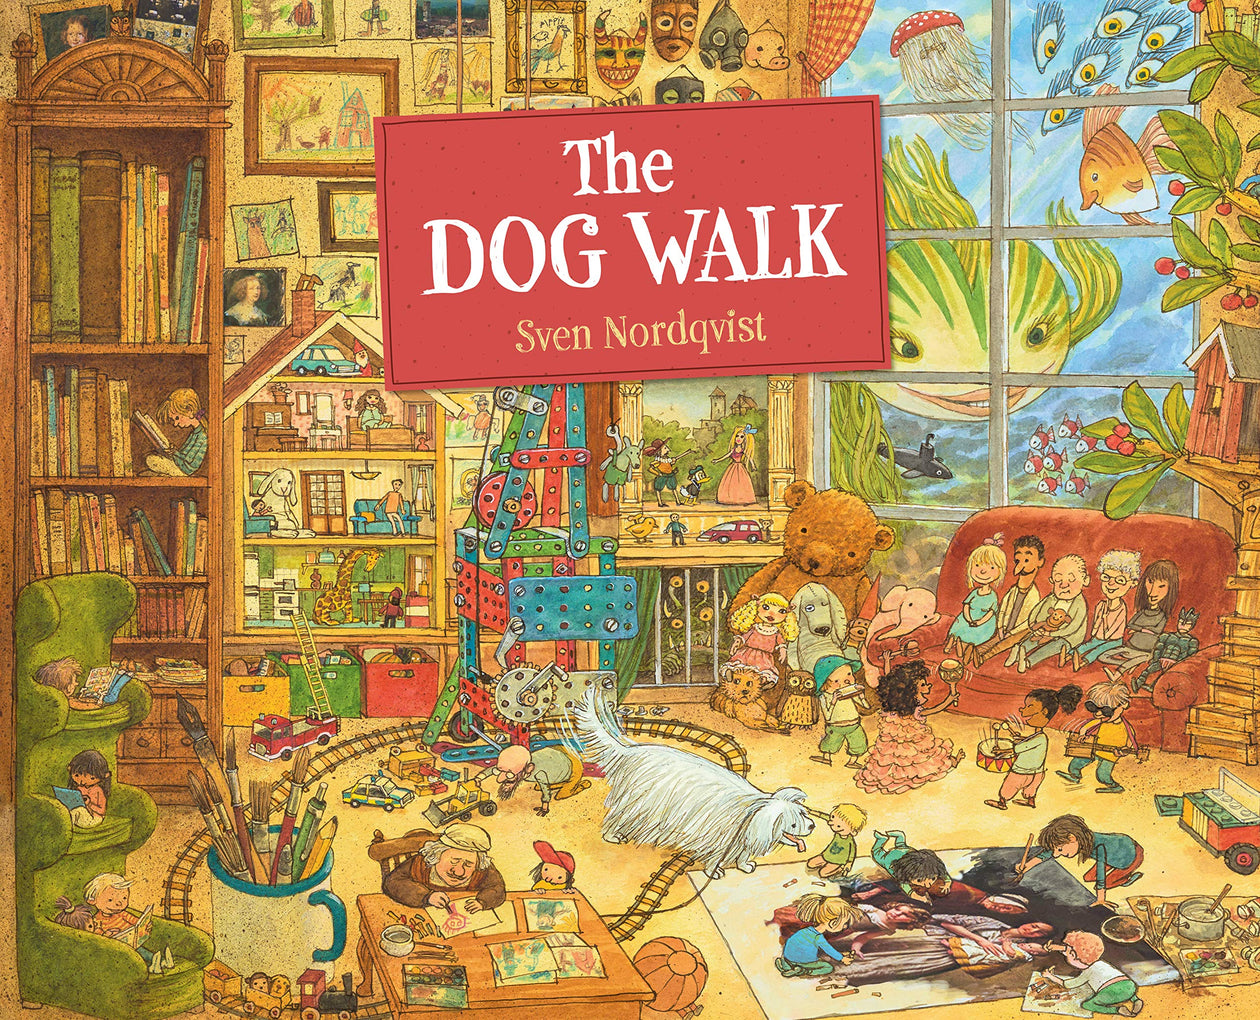 The Dog Walk by Sven Nordqvist